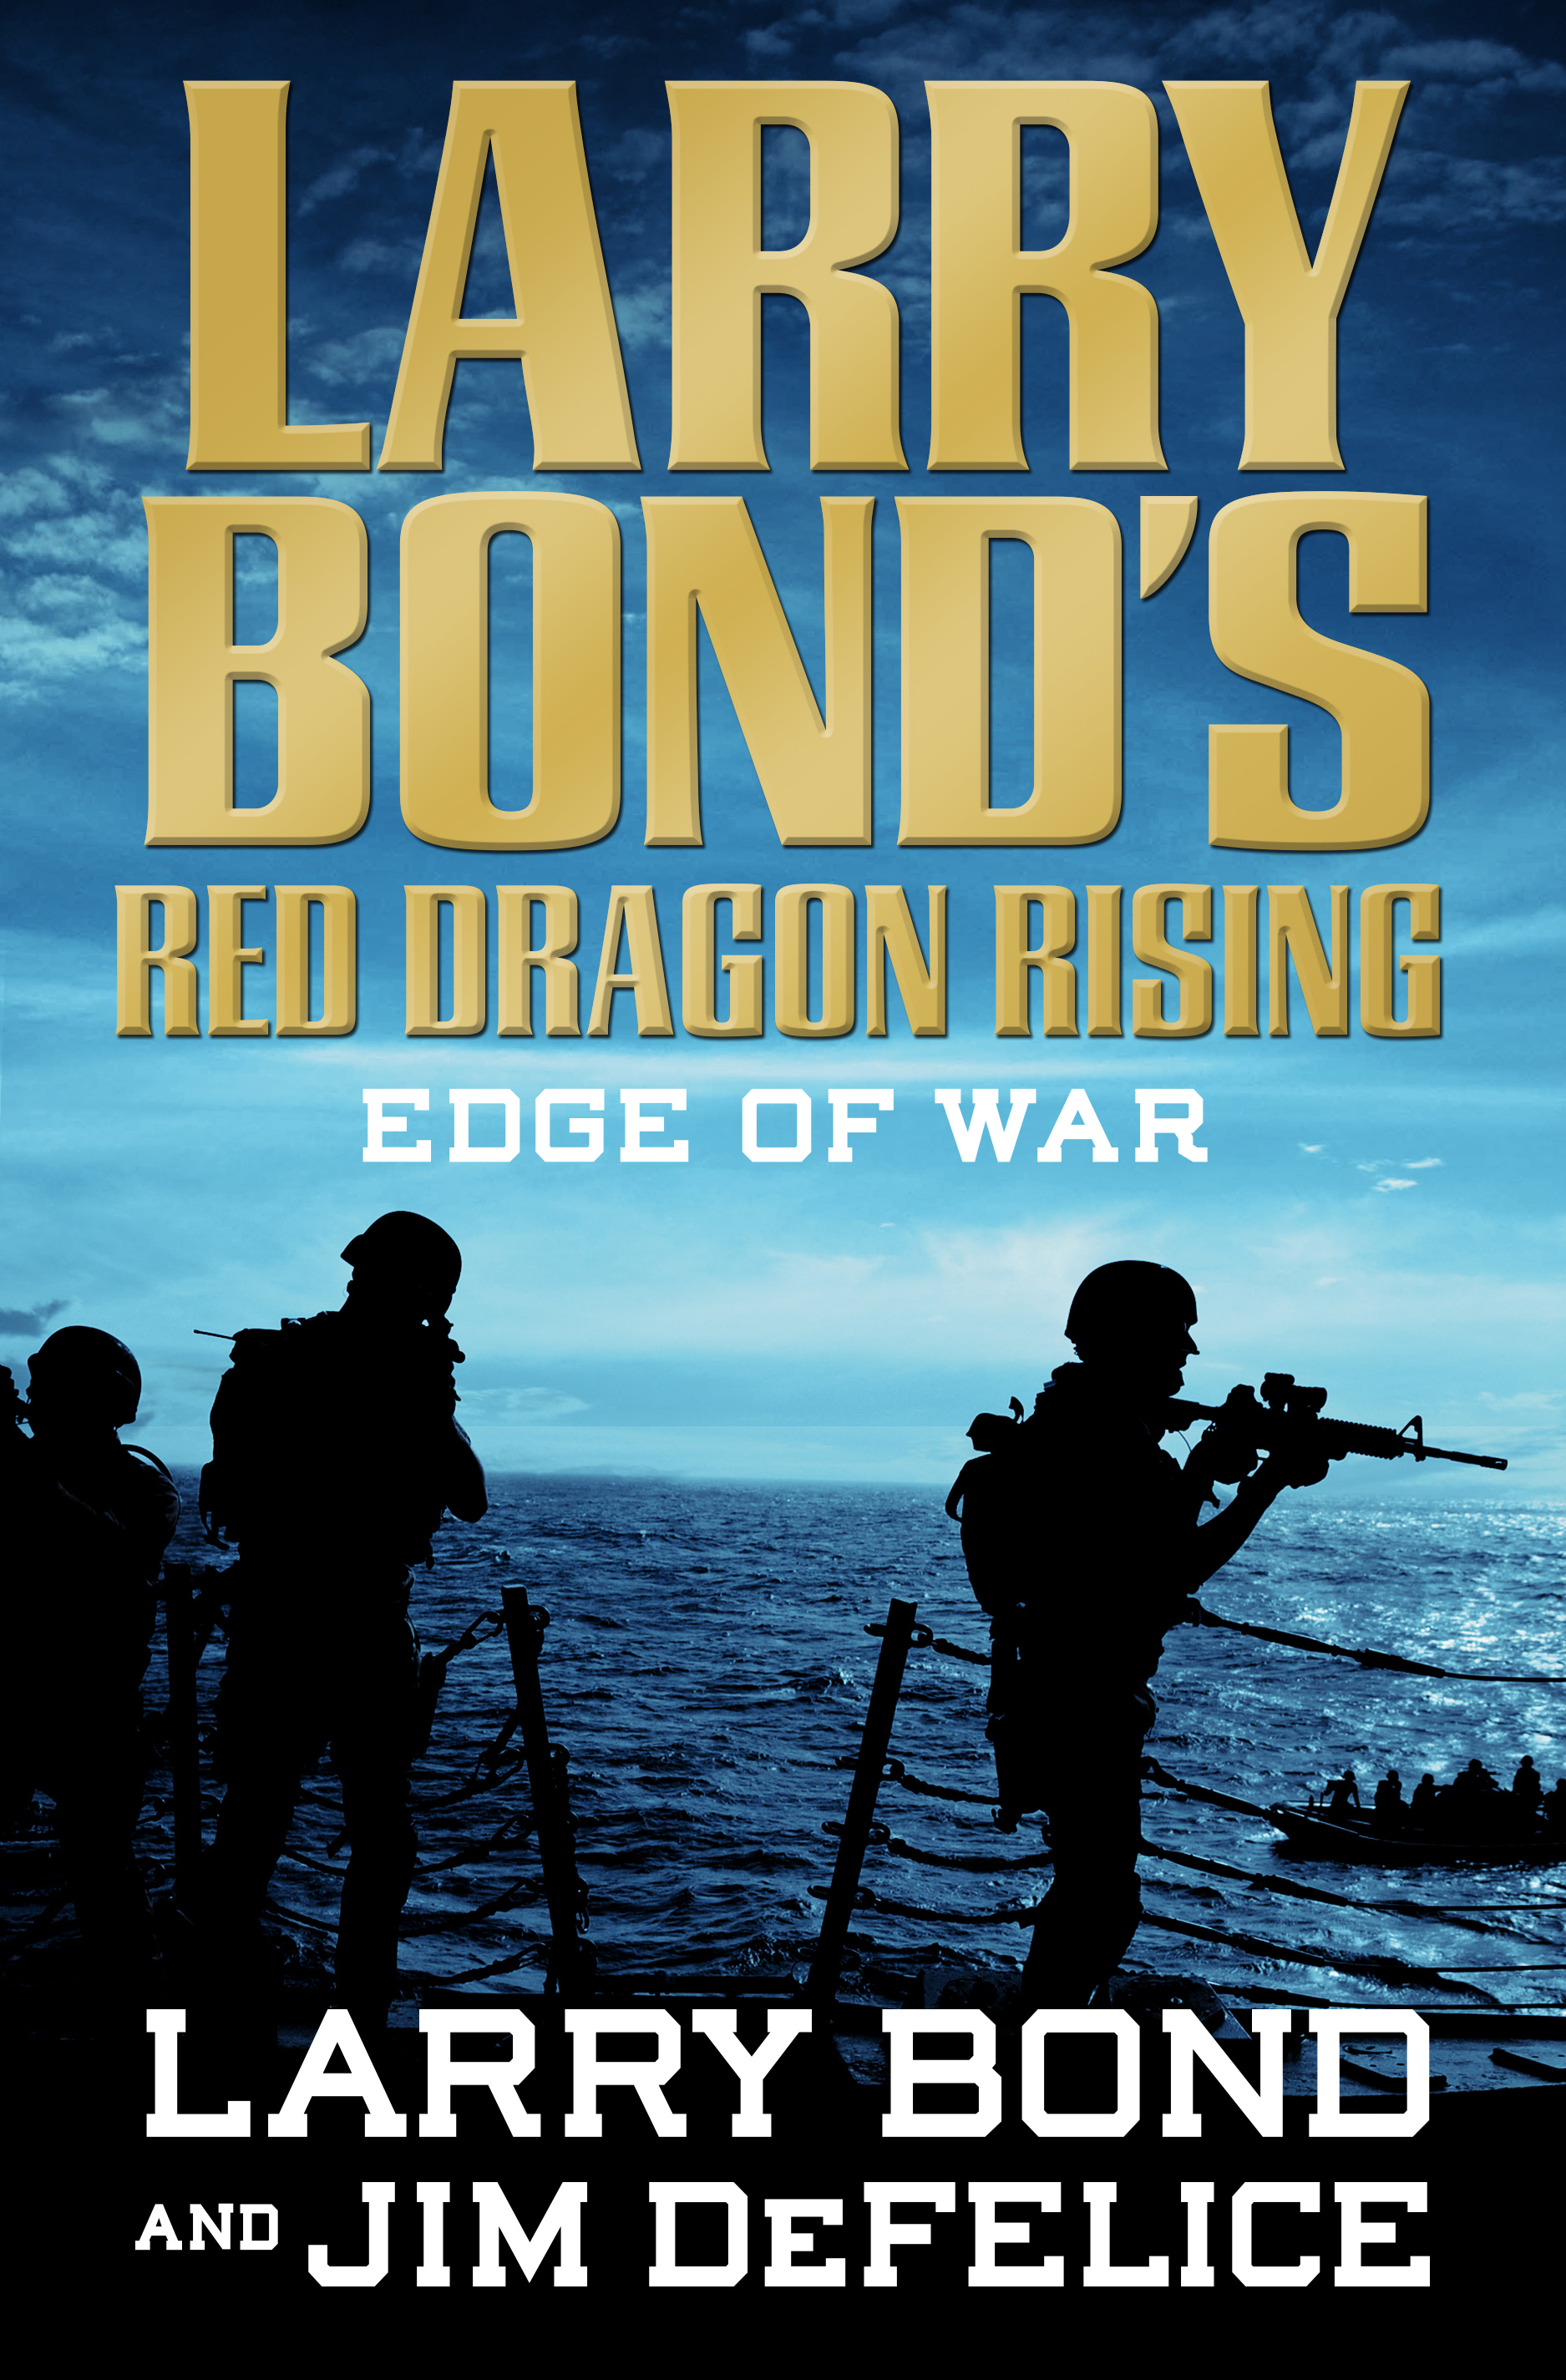 Larry Bond's Red Dragon Rising: Edge of War by Larry Bond, Jim DeFelice